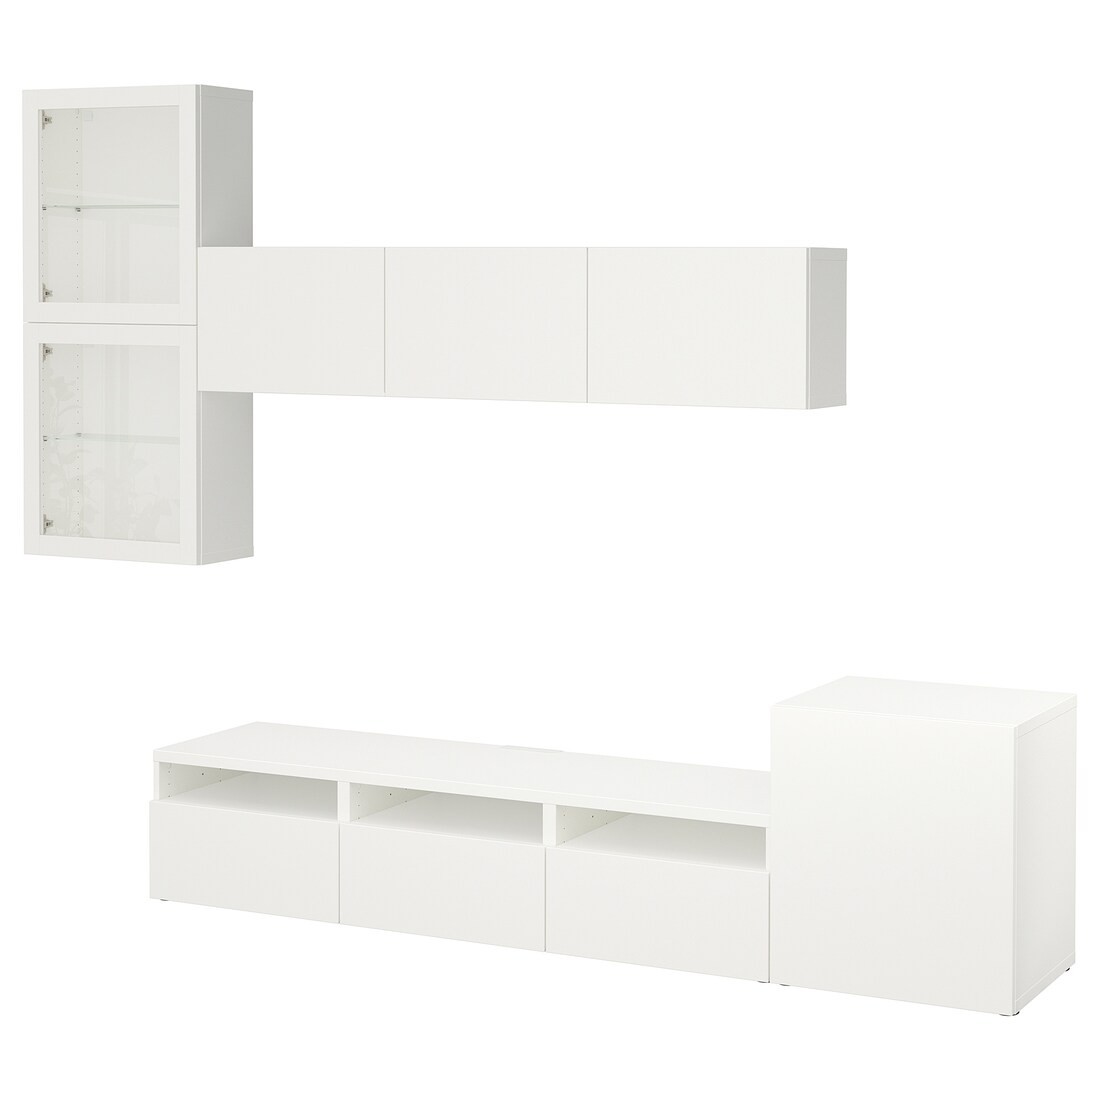 IKEA BESTÅ БЕСТО Комбинация для ТВ / стеклянные двери, белый / Lappviken белое стекло прозрачное, 300x42x211 см 19406726 | 194.067.26